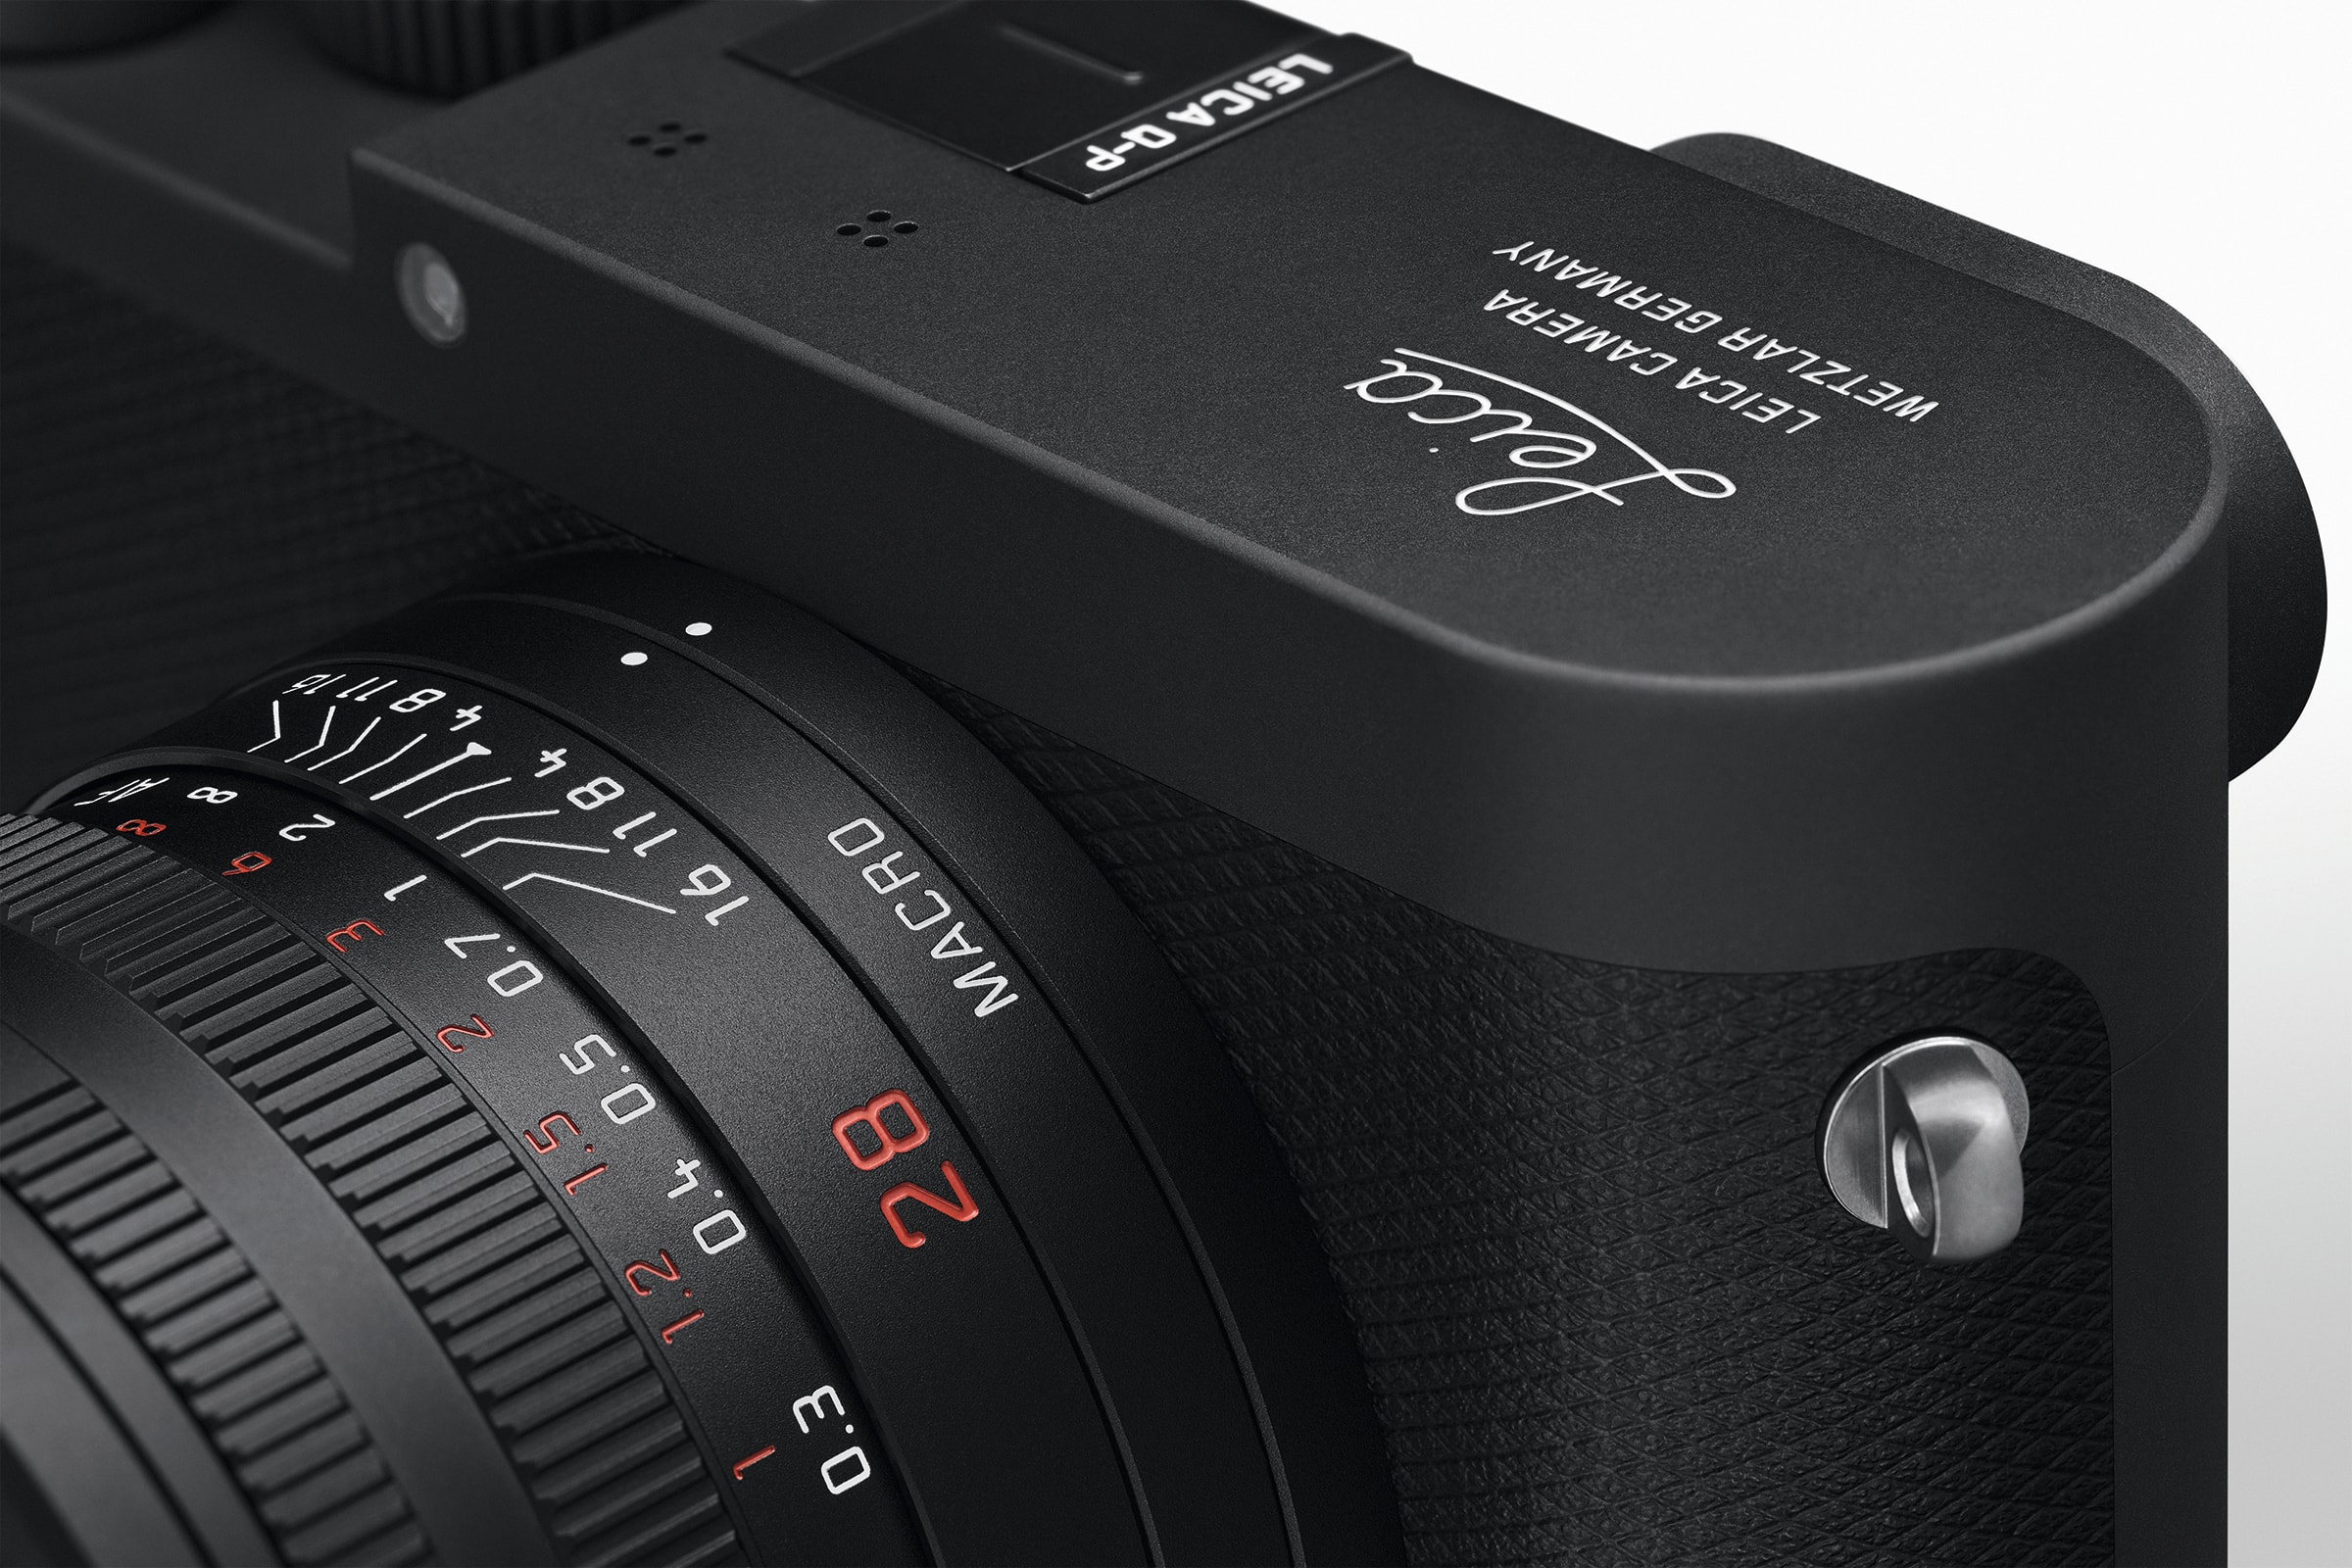 Leica 發佈 Q 系列新機型相機 Leica Q-P 